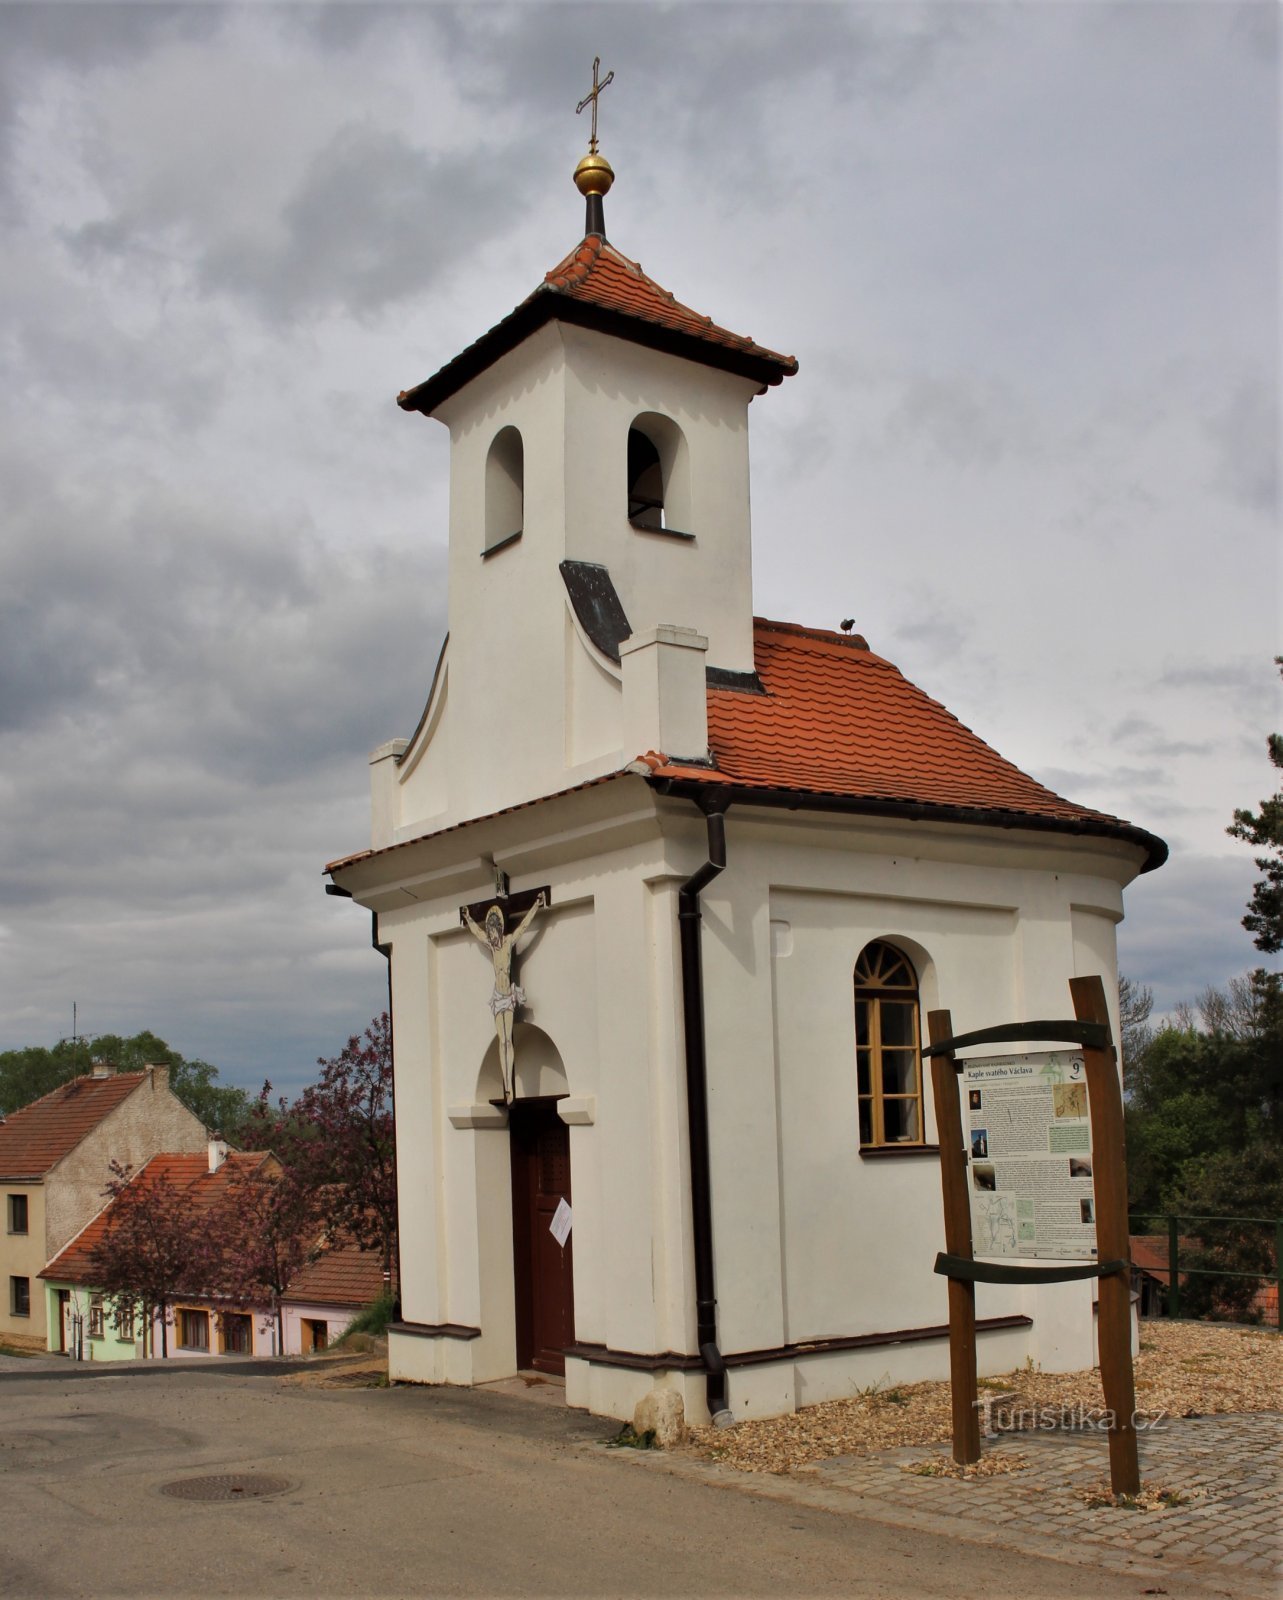 Chapel of St. Václav in Holasice